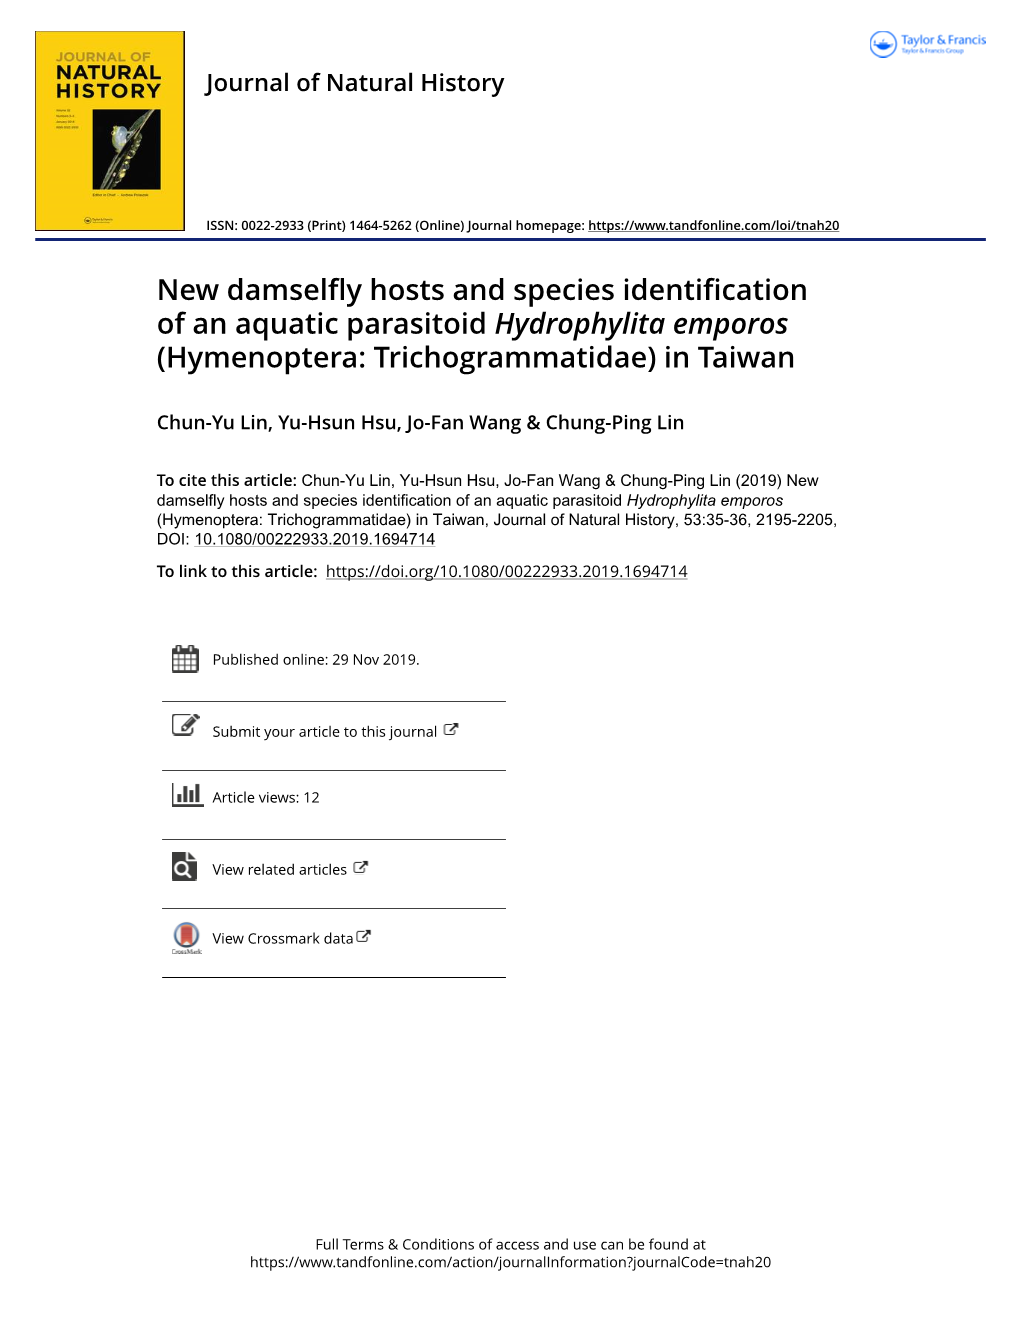 New Damselfly Hosts and Species Identification of an Aquatic Parasitoid Hydrophylita Emporos (Hymenoptera: Trichogrammatidae) in Taiwan